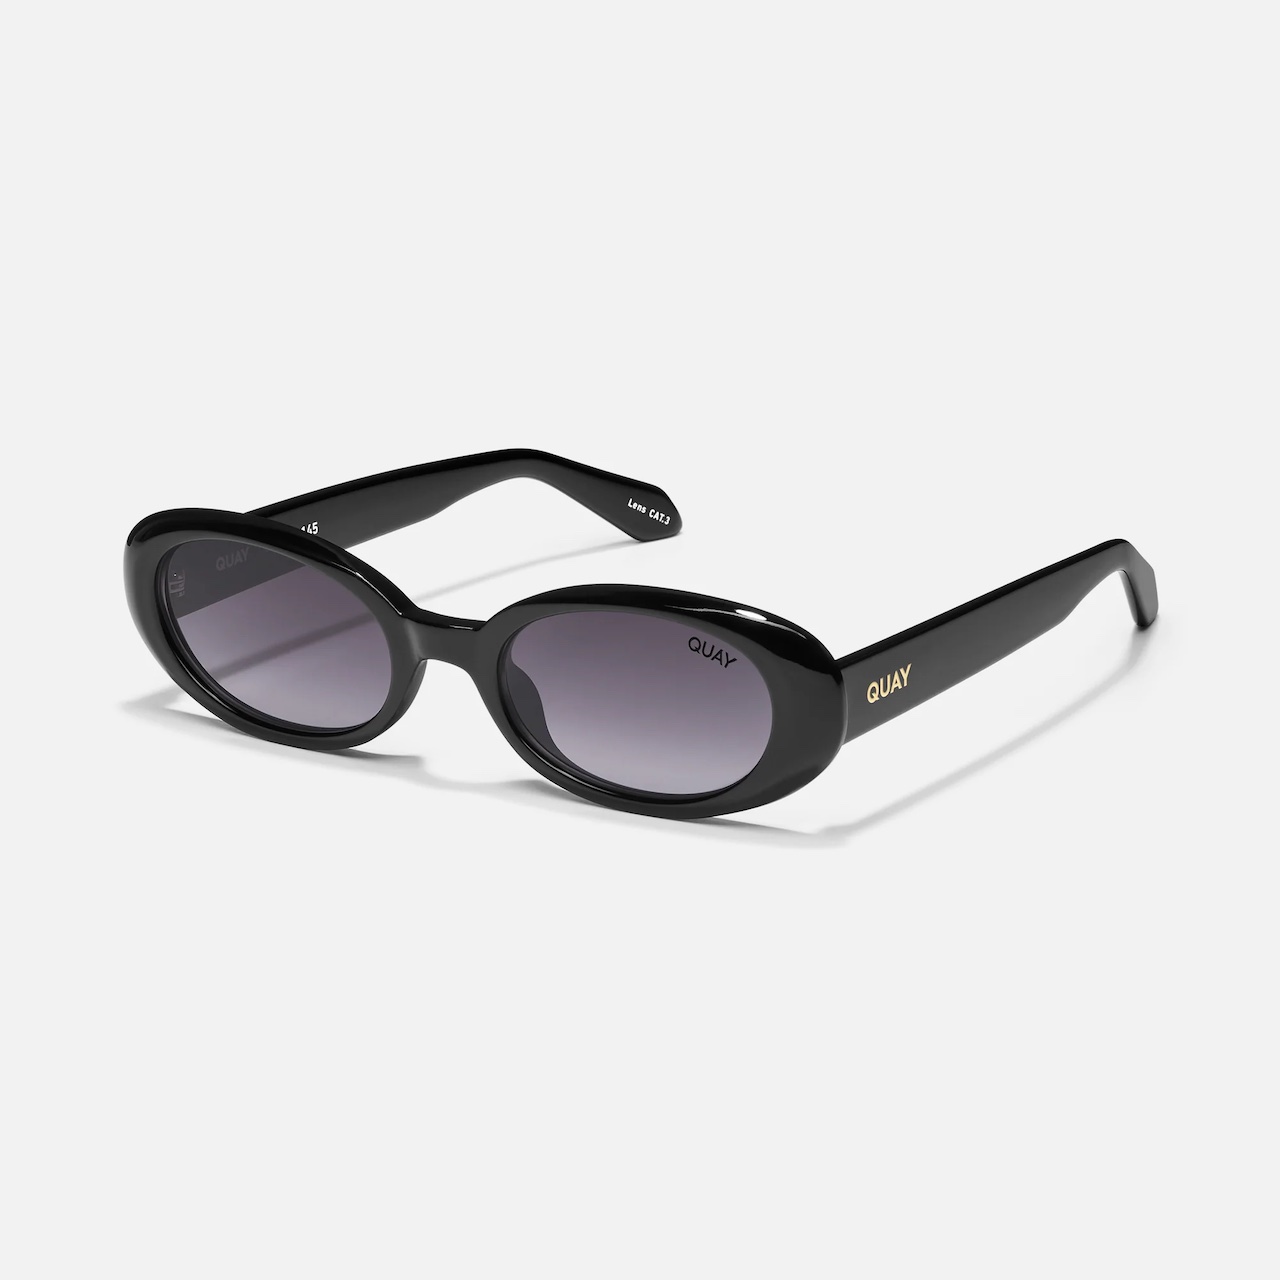 Emily Ratajkowski's Favorite Accessory: QUAY Sunglasses